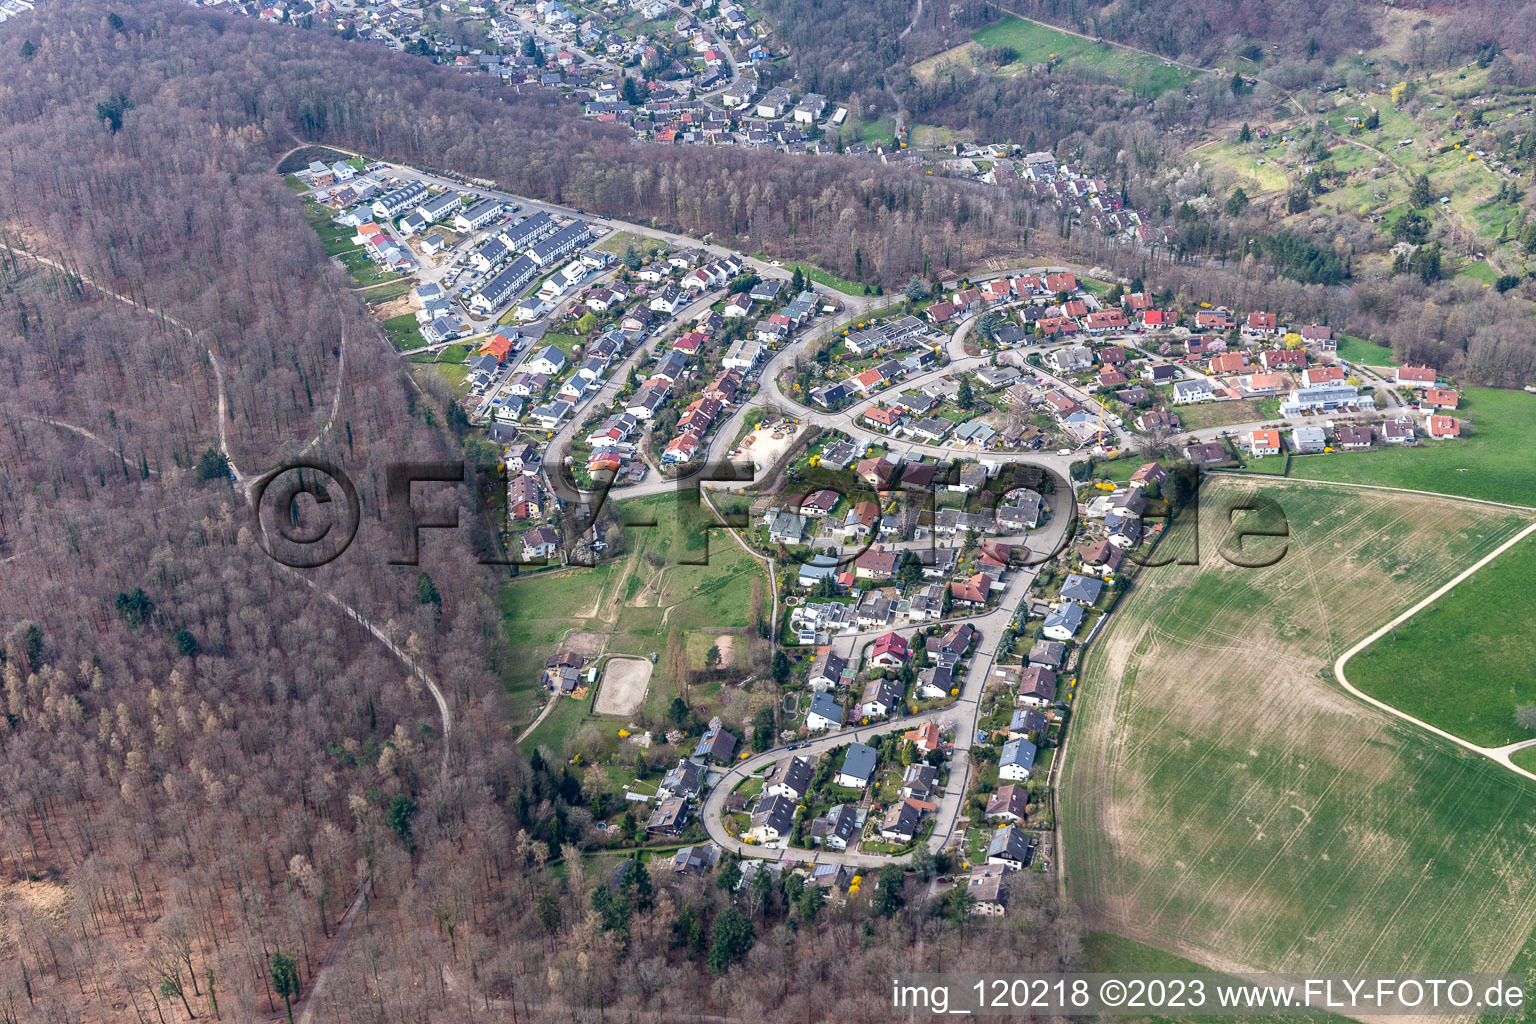 District Grenzach in Grenzach-Wyhlen in the state Baden-Wuerttemberg, Germany